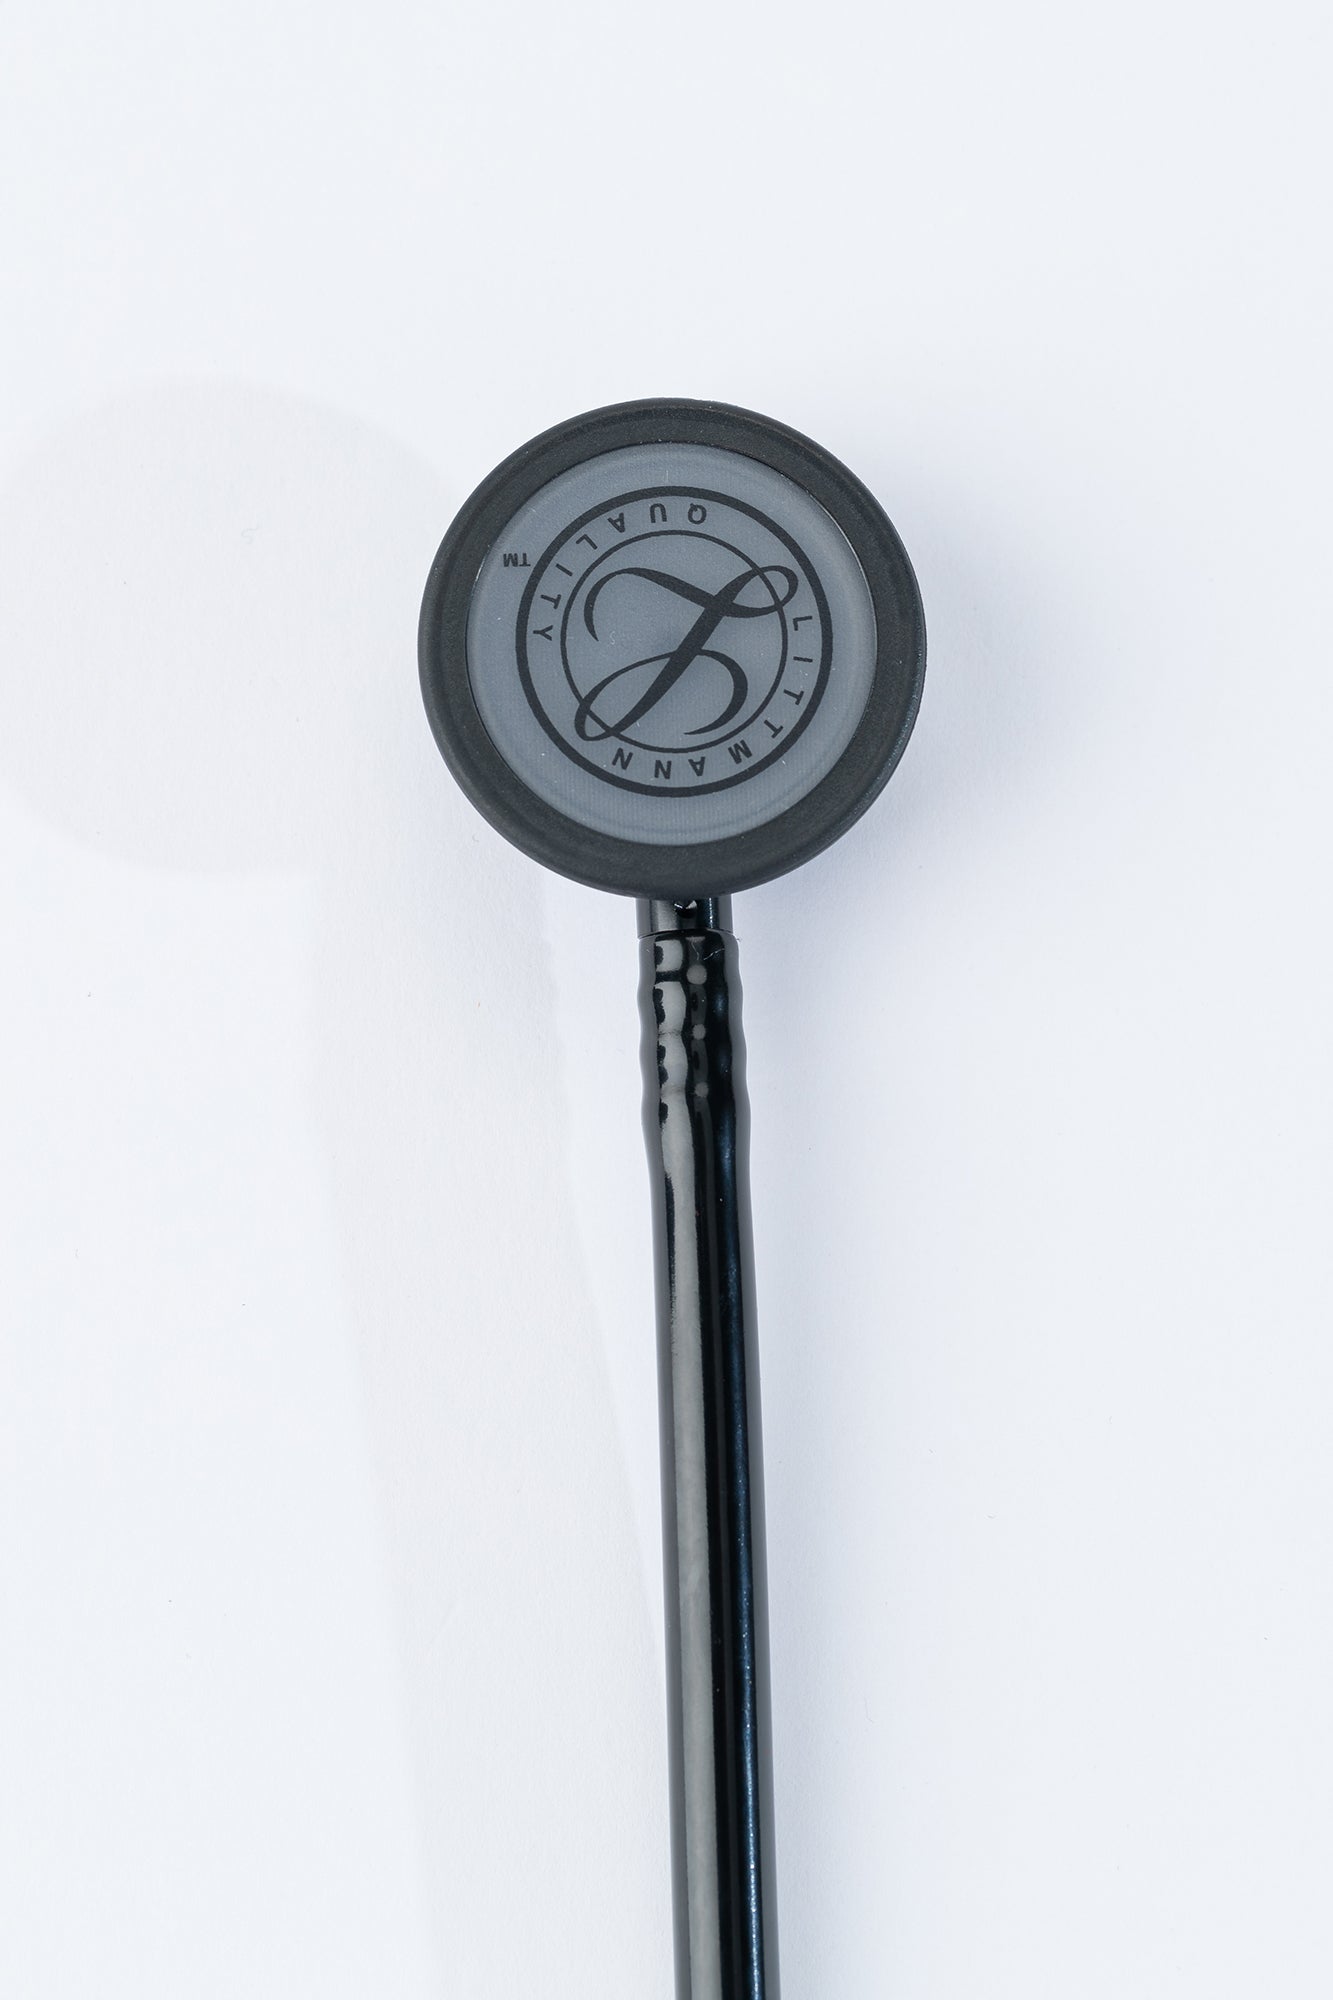 3M™ Littmann® Classic III™ Stethoscope, Black Edition Chestpiece, Black Tube, 27 inch, 5803